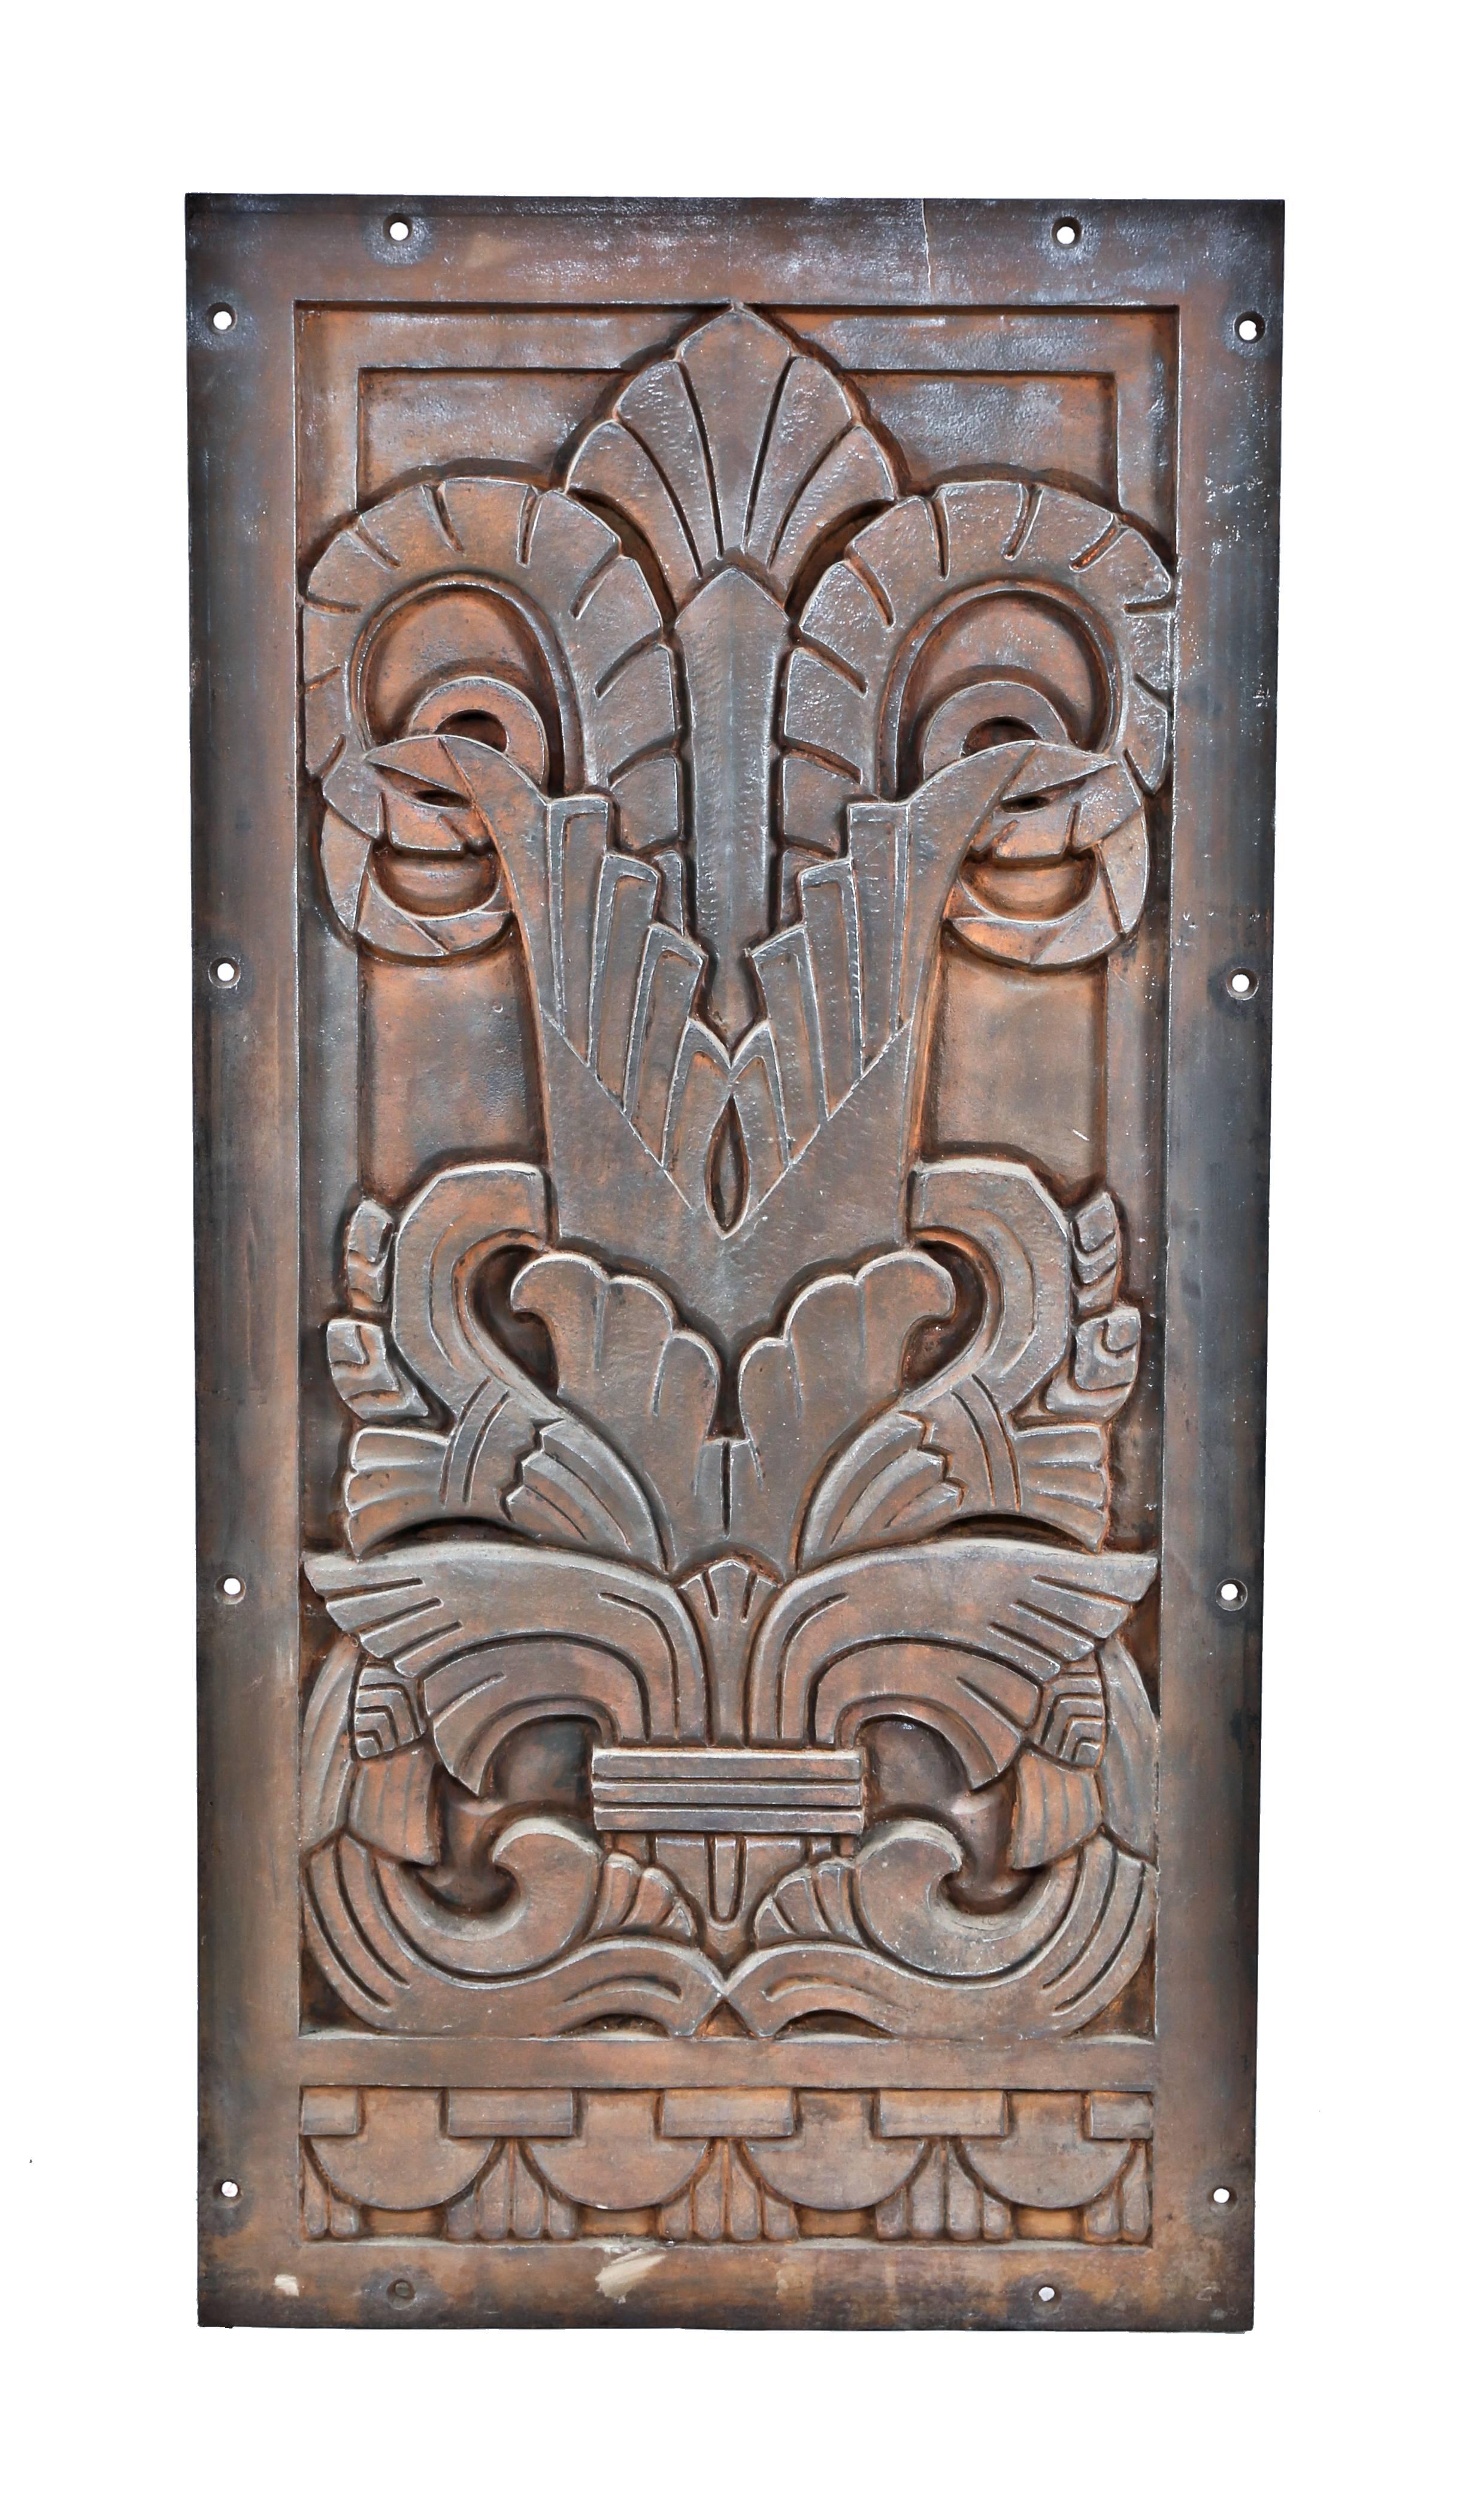 1920s Art Deco Style Cast Iron Building Facade Panel